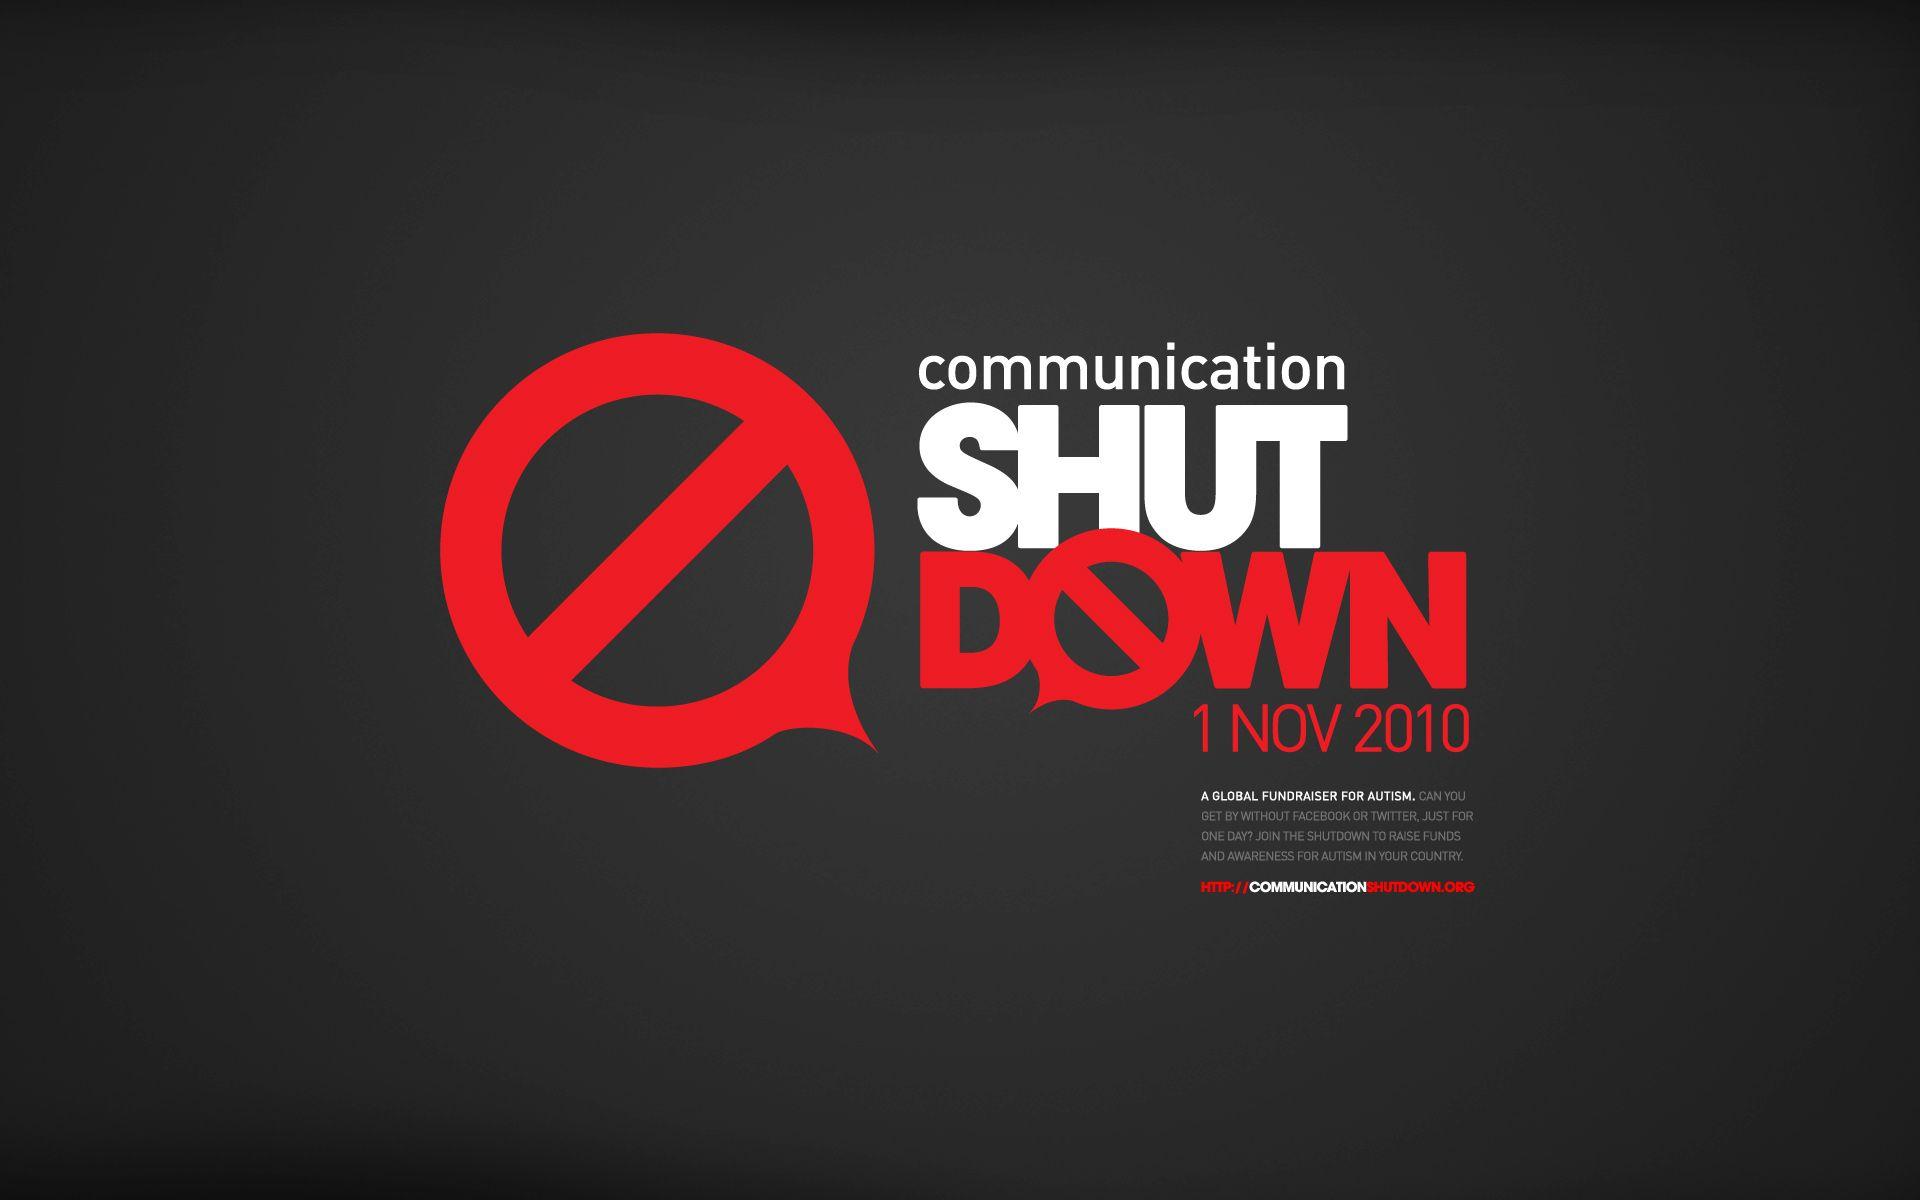 Communication shutdown